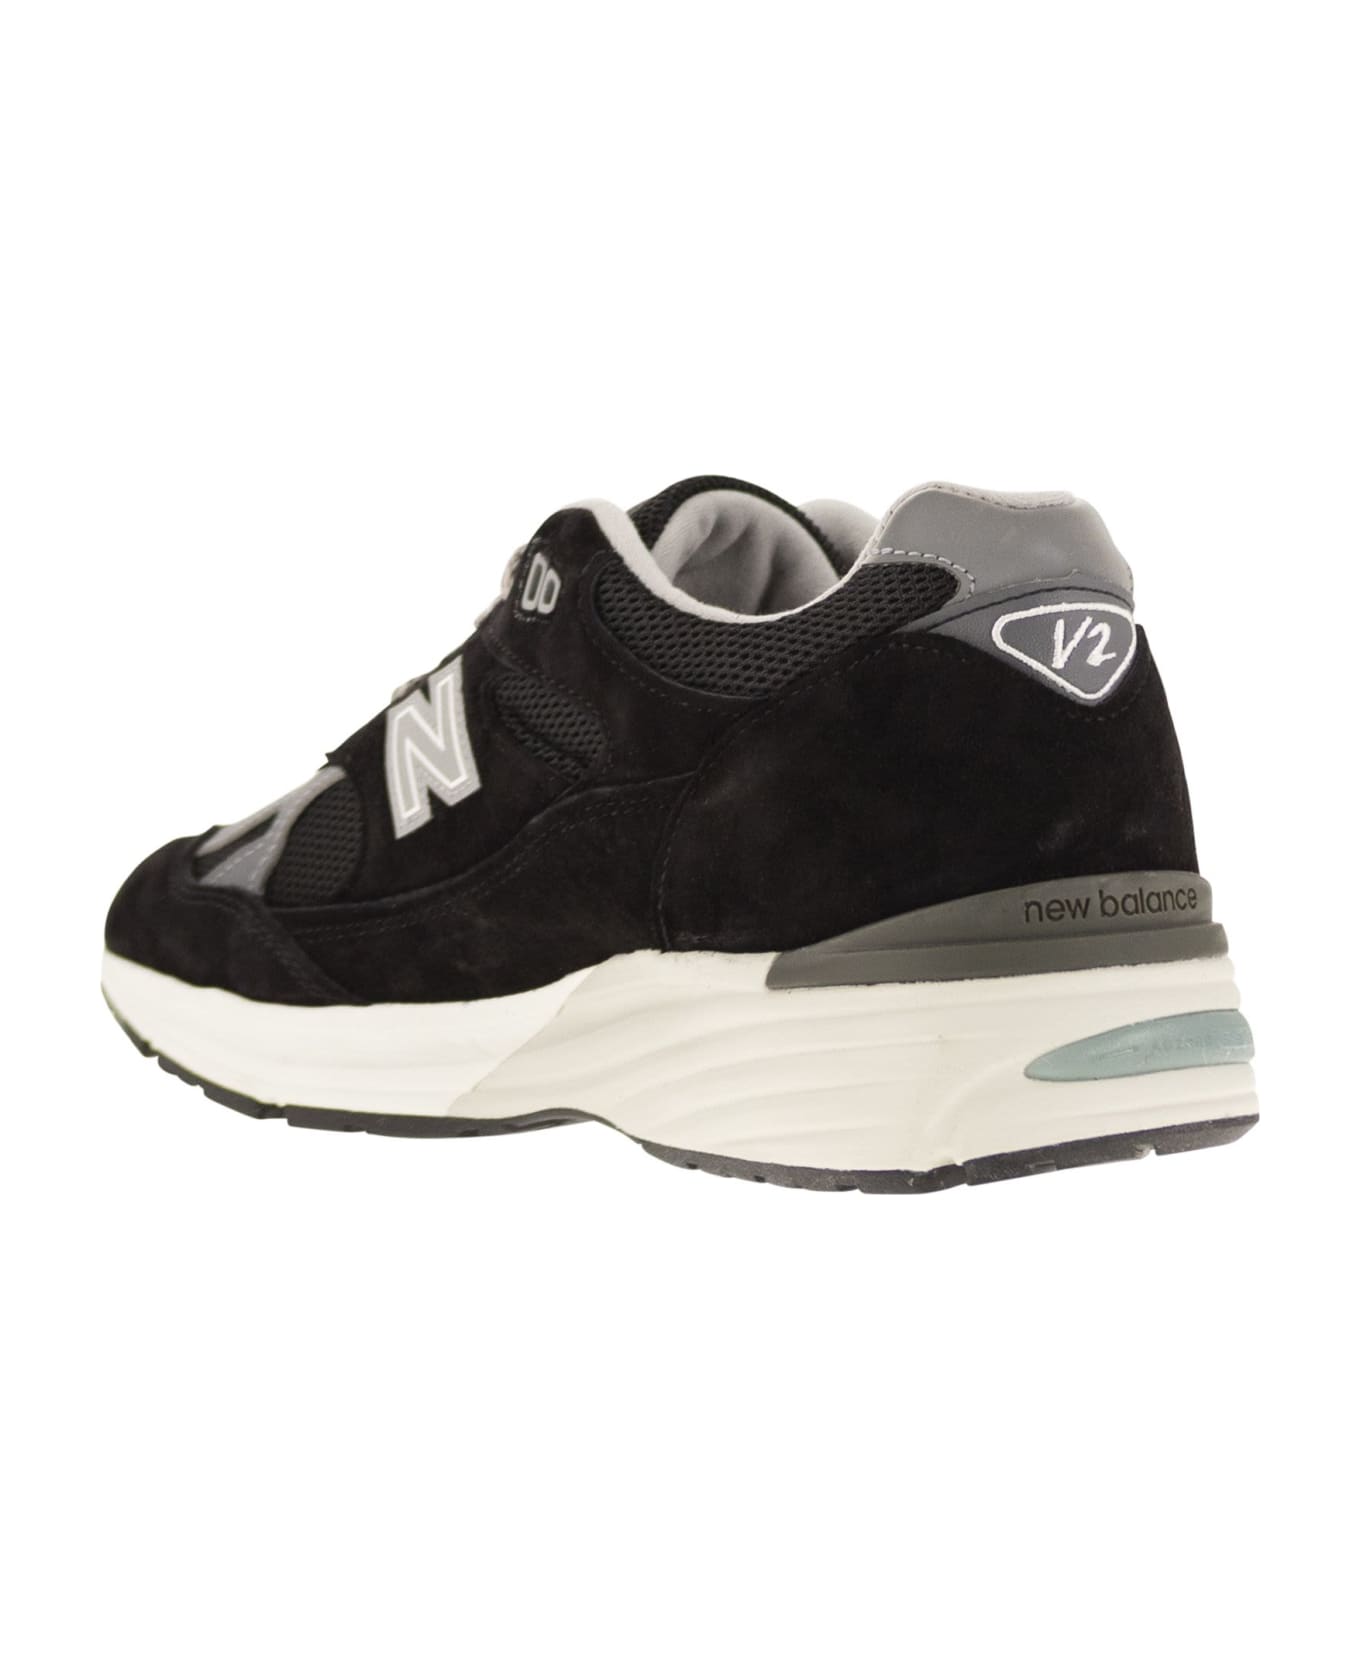 New Balance 991v1 - Sneakers - Black